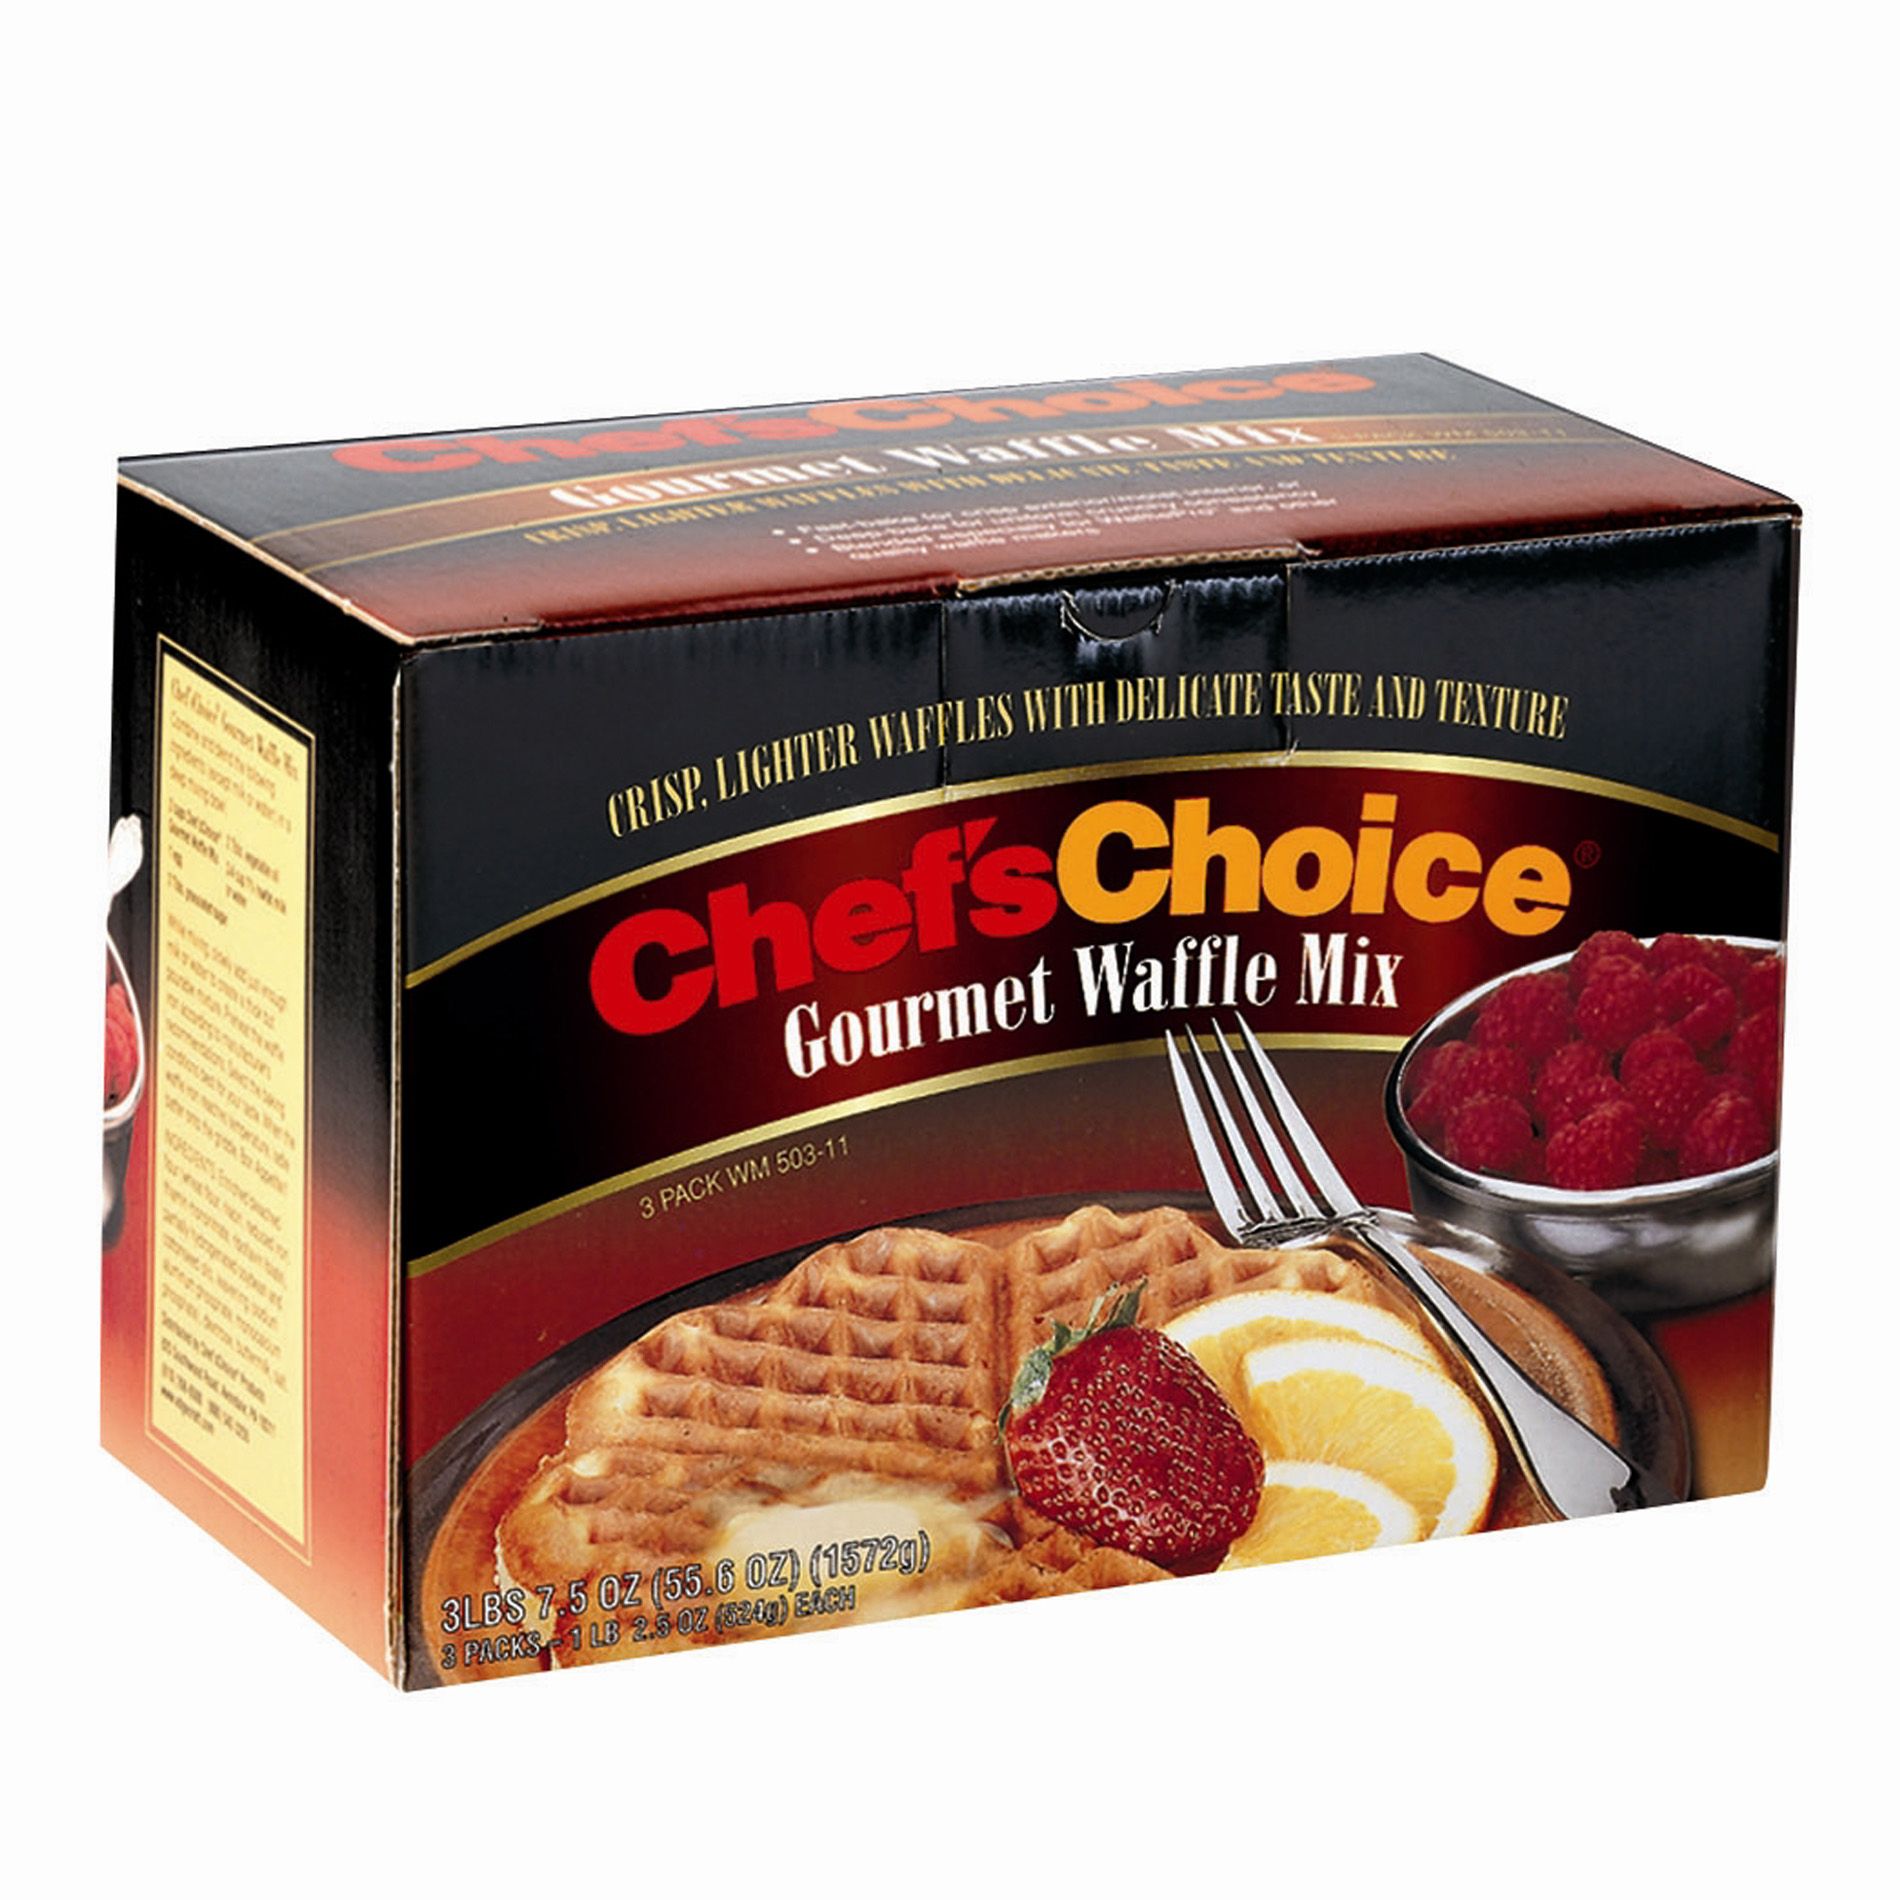 Chef'sChoice 8350311 Gourmet Waffle Mix